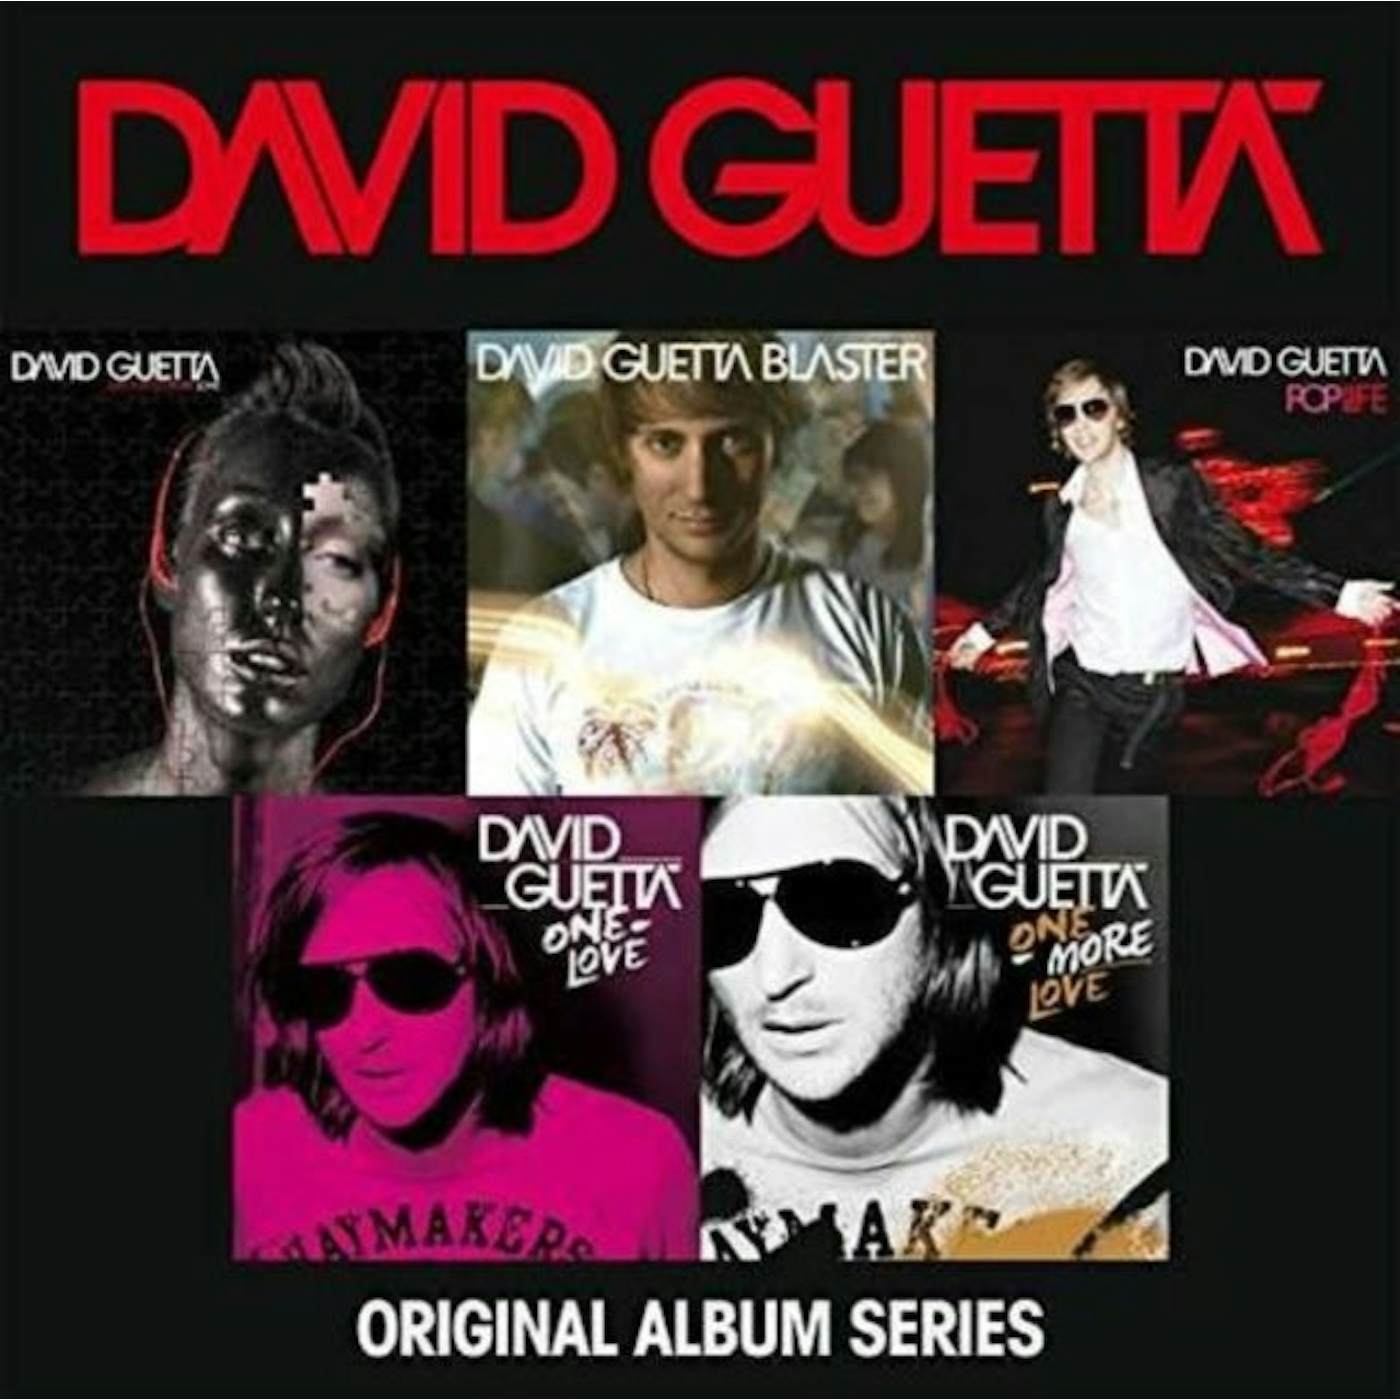 David Guetta CD - Original Album Series